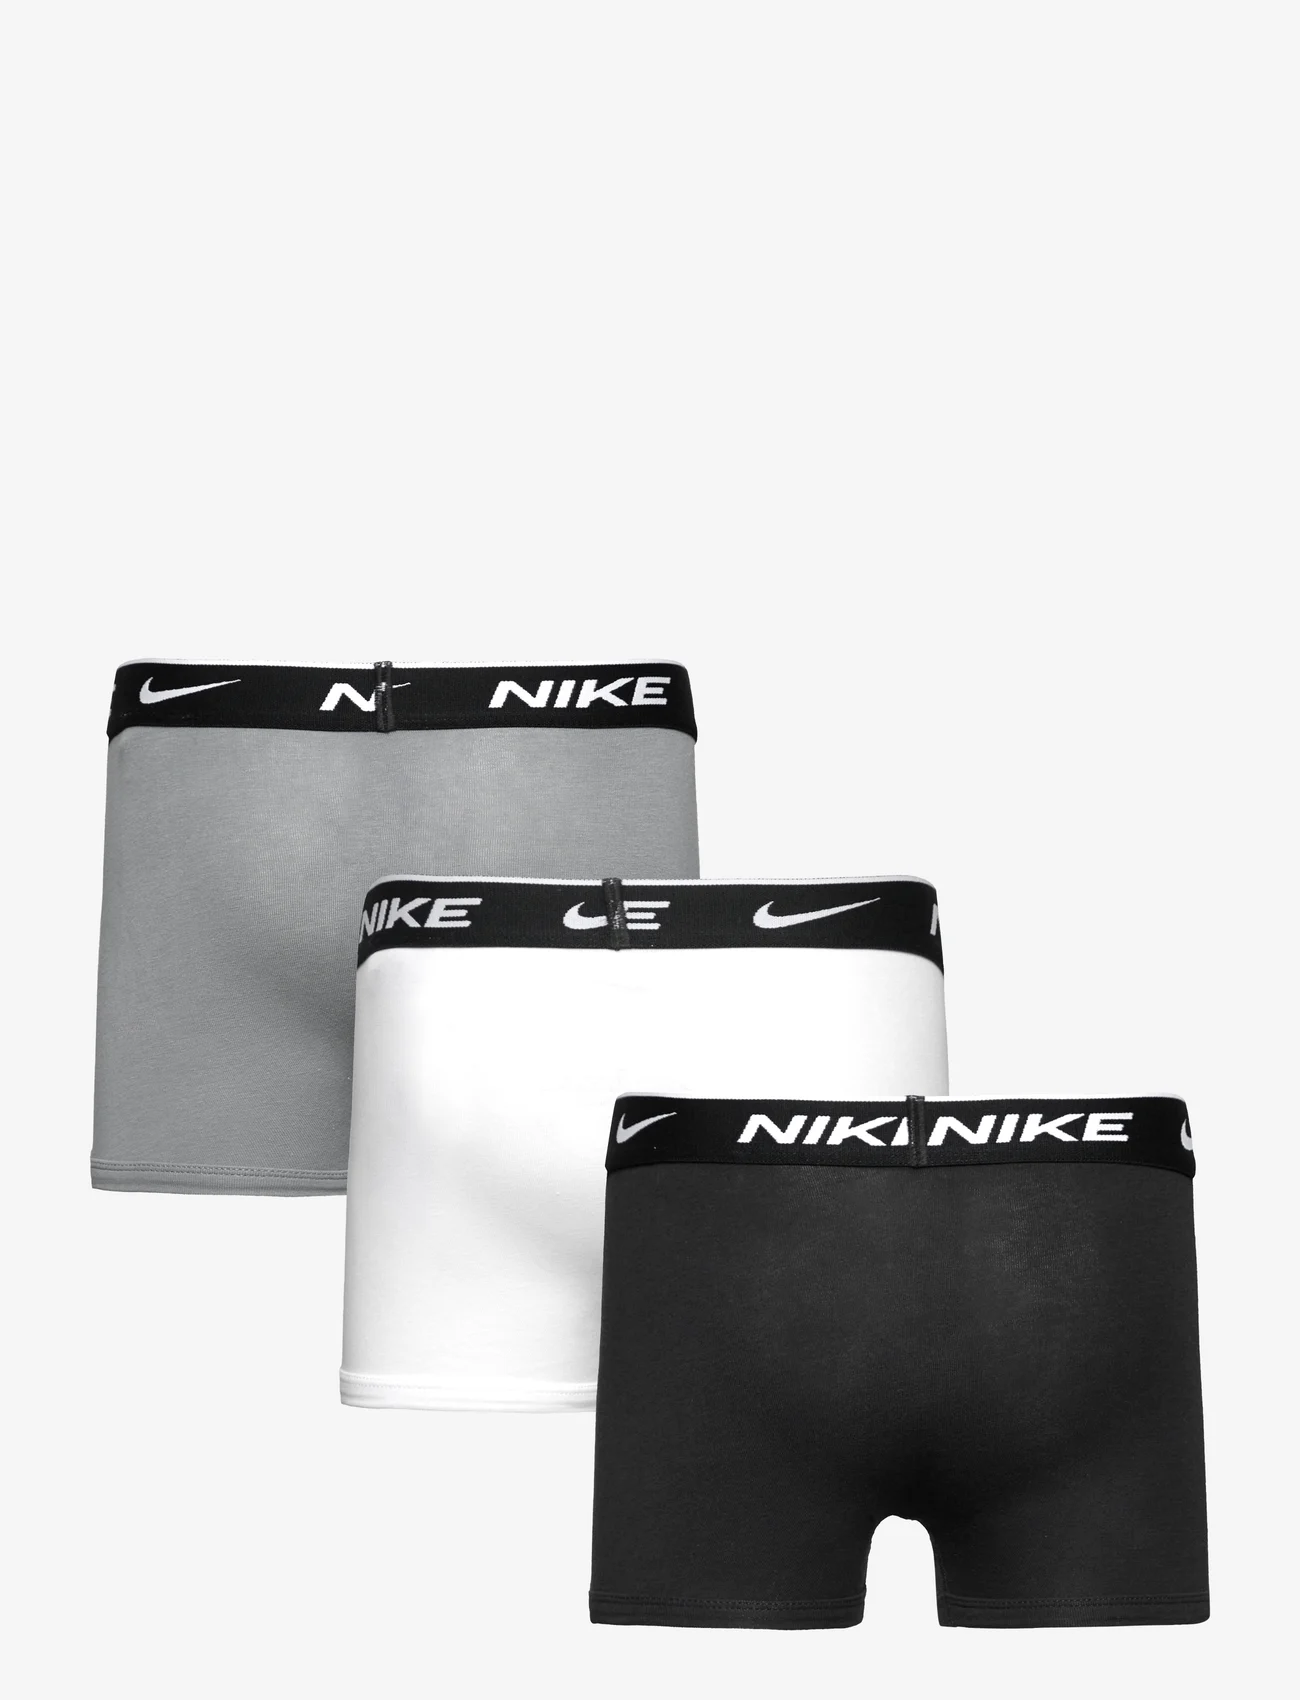 Nike - NHB NHB E DAY COTTON STRETCH 3 / NHB NHB E DAY COTTON STRETC - underbukser - black / white - 1